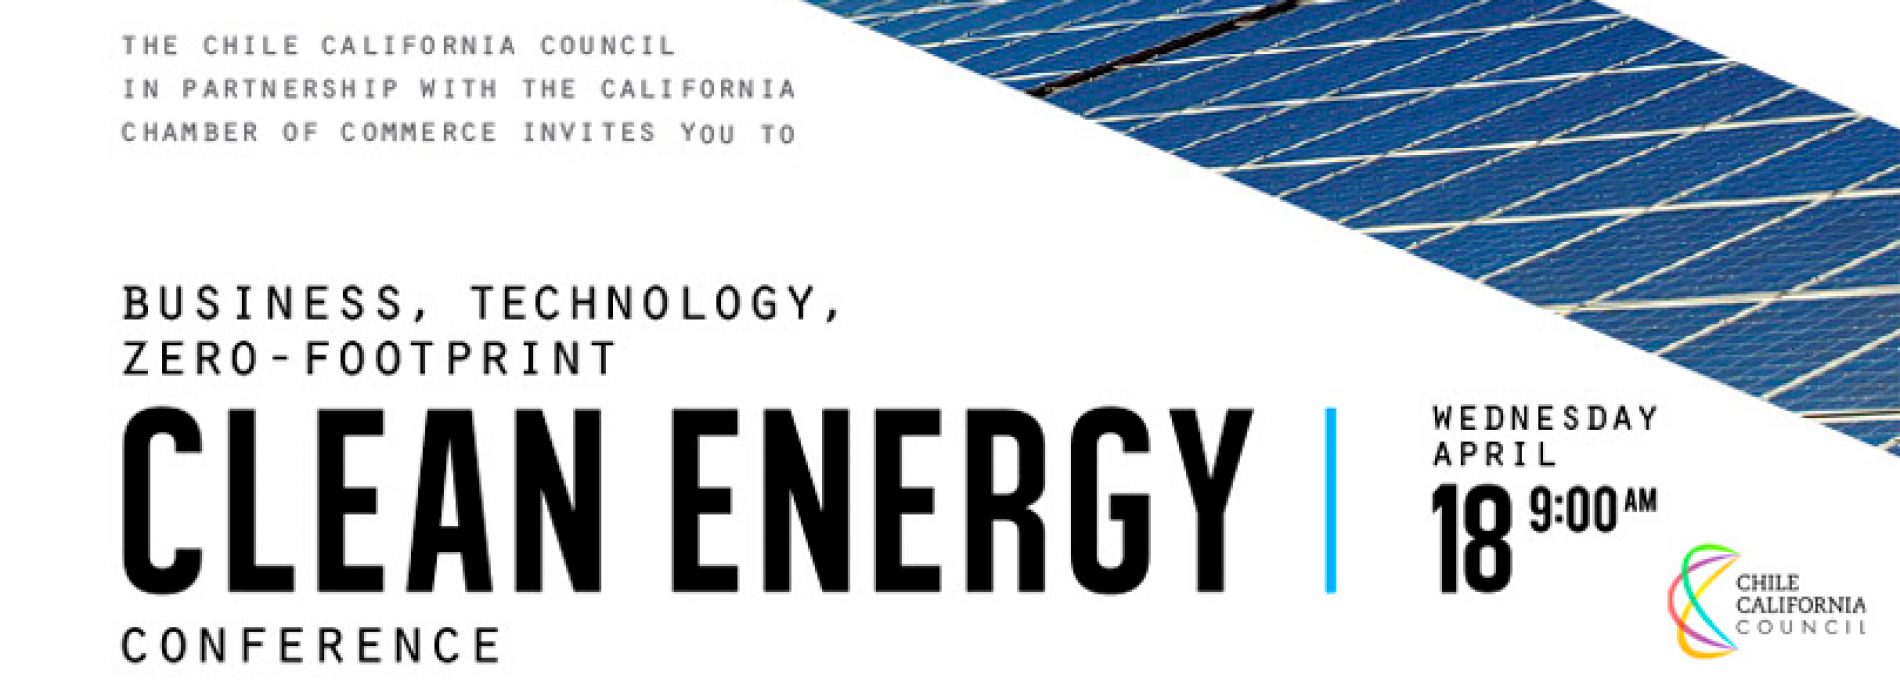 Clean Energy Conference, April 18 - Registration & Program